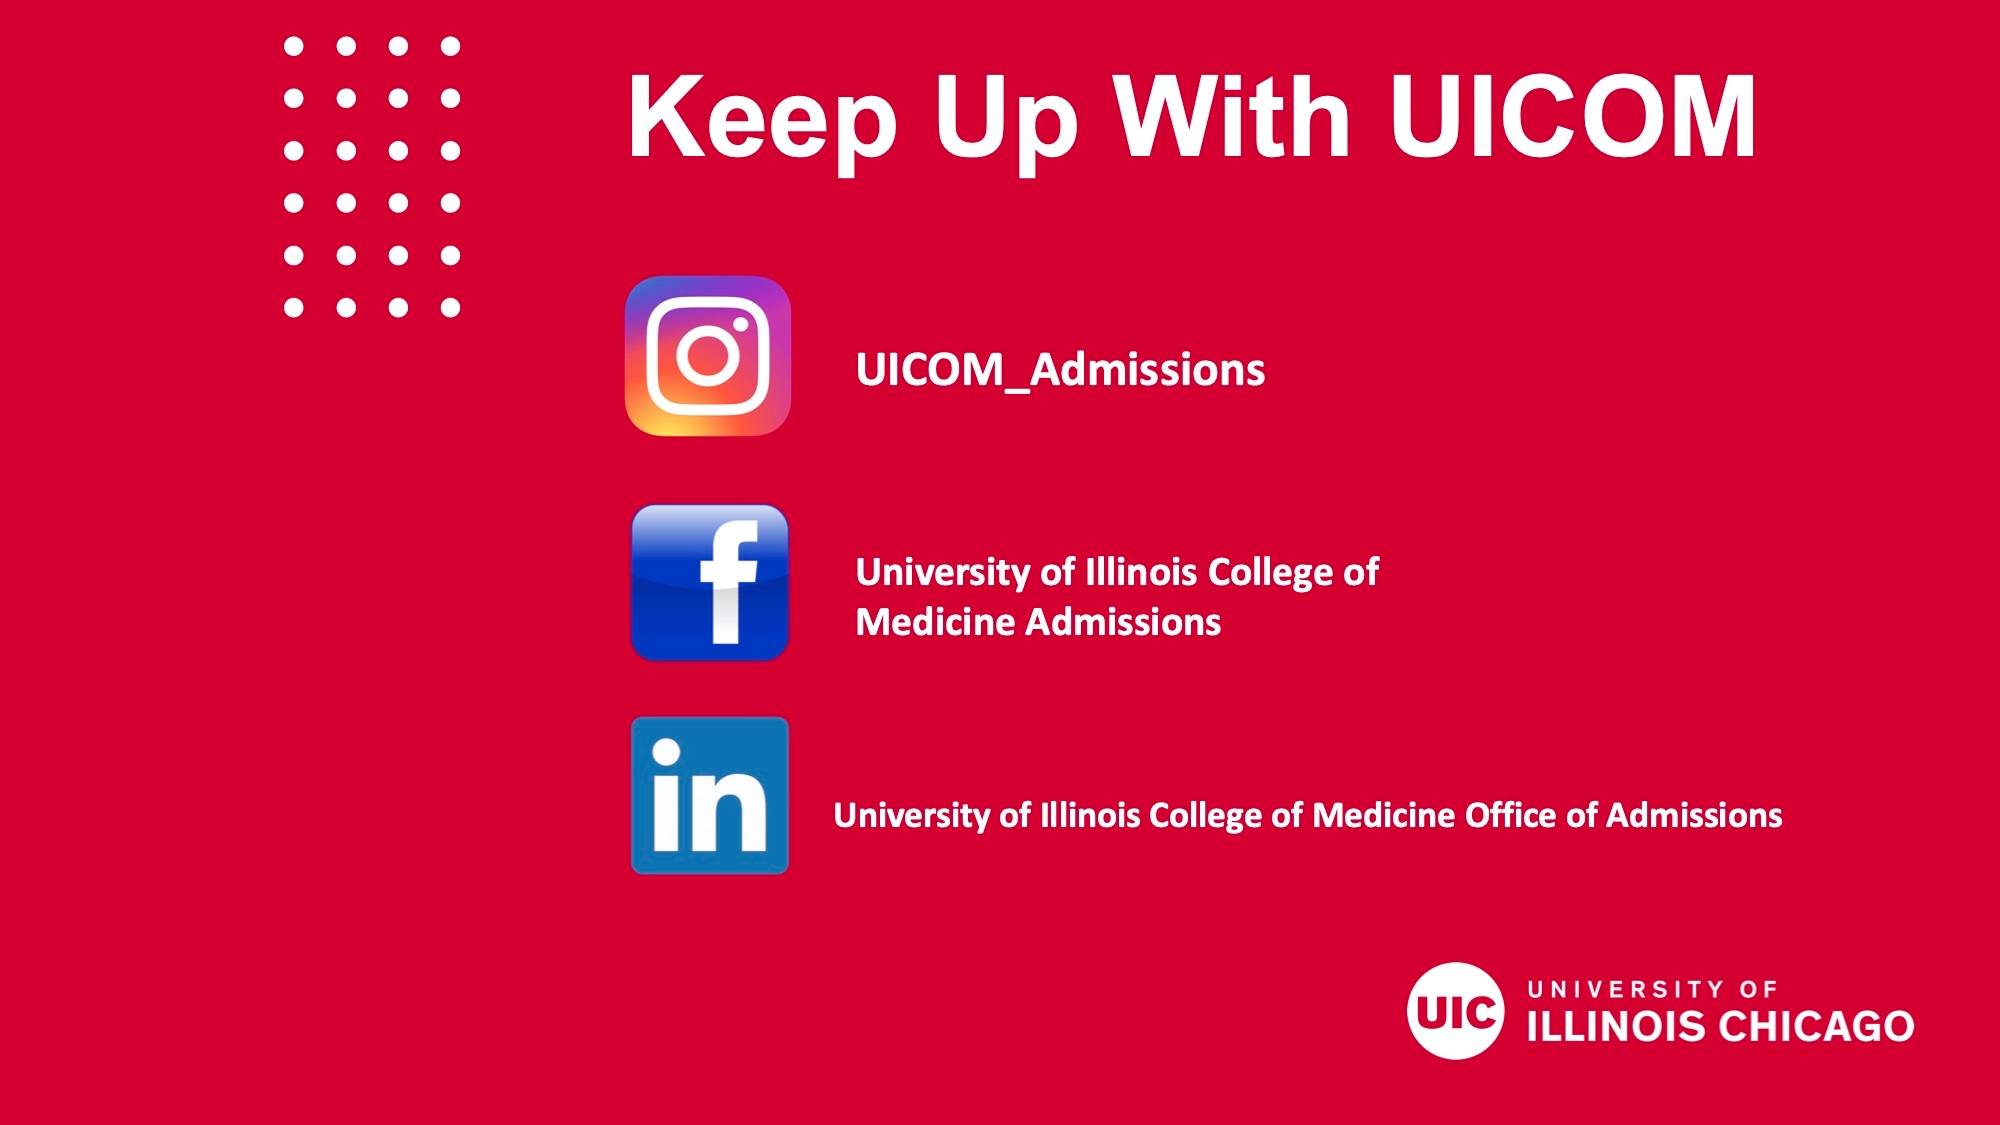 Keep up with UICOM on social media